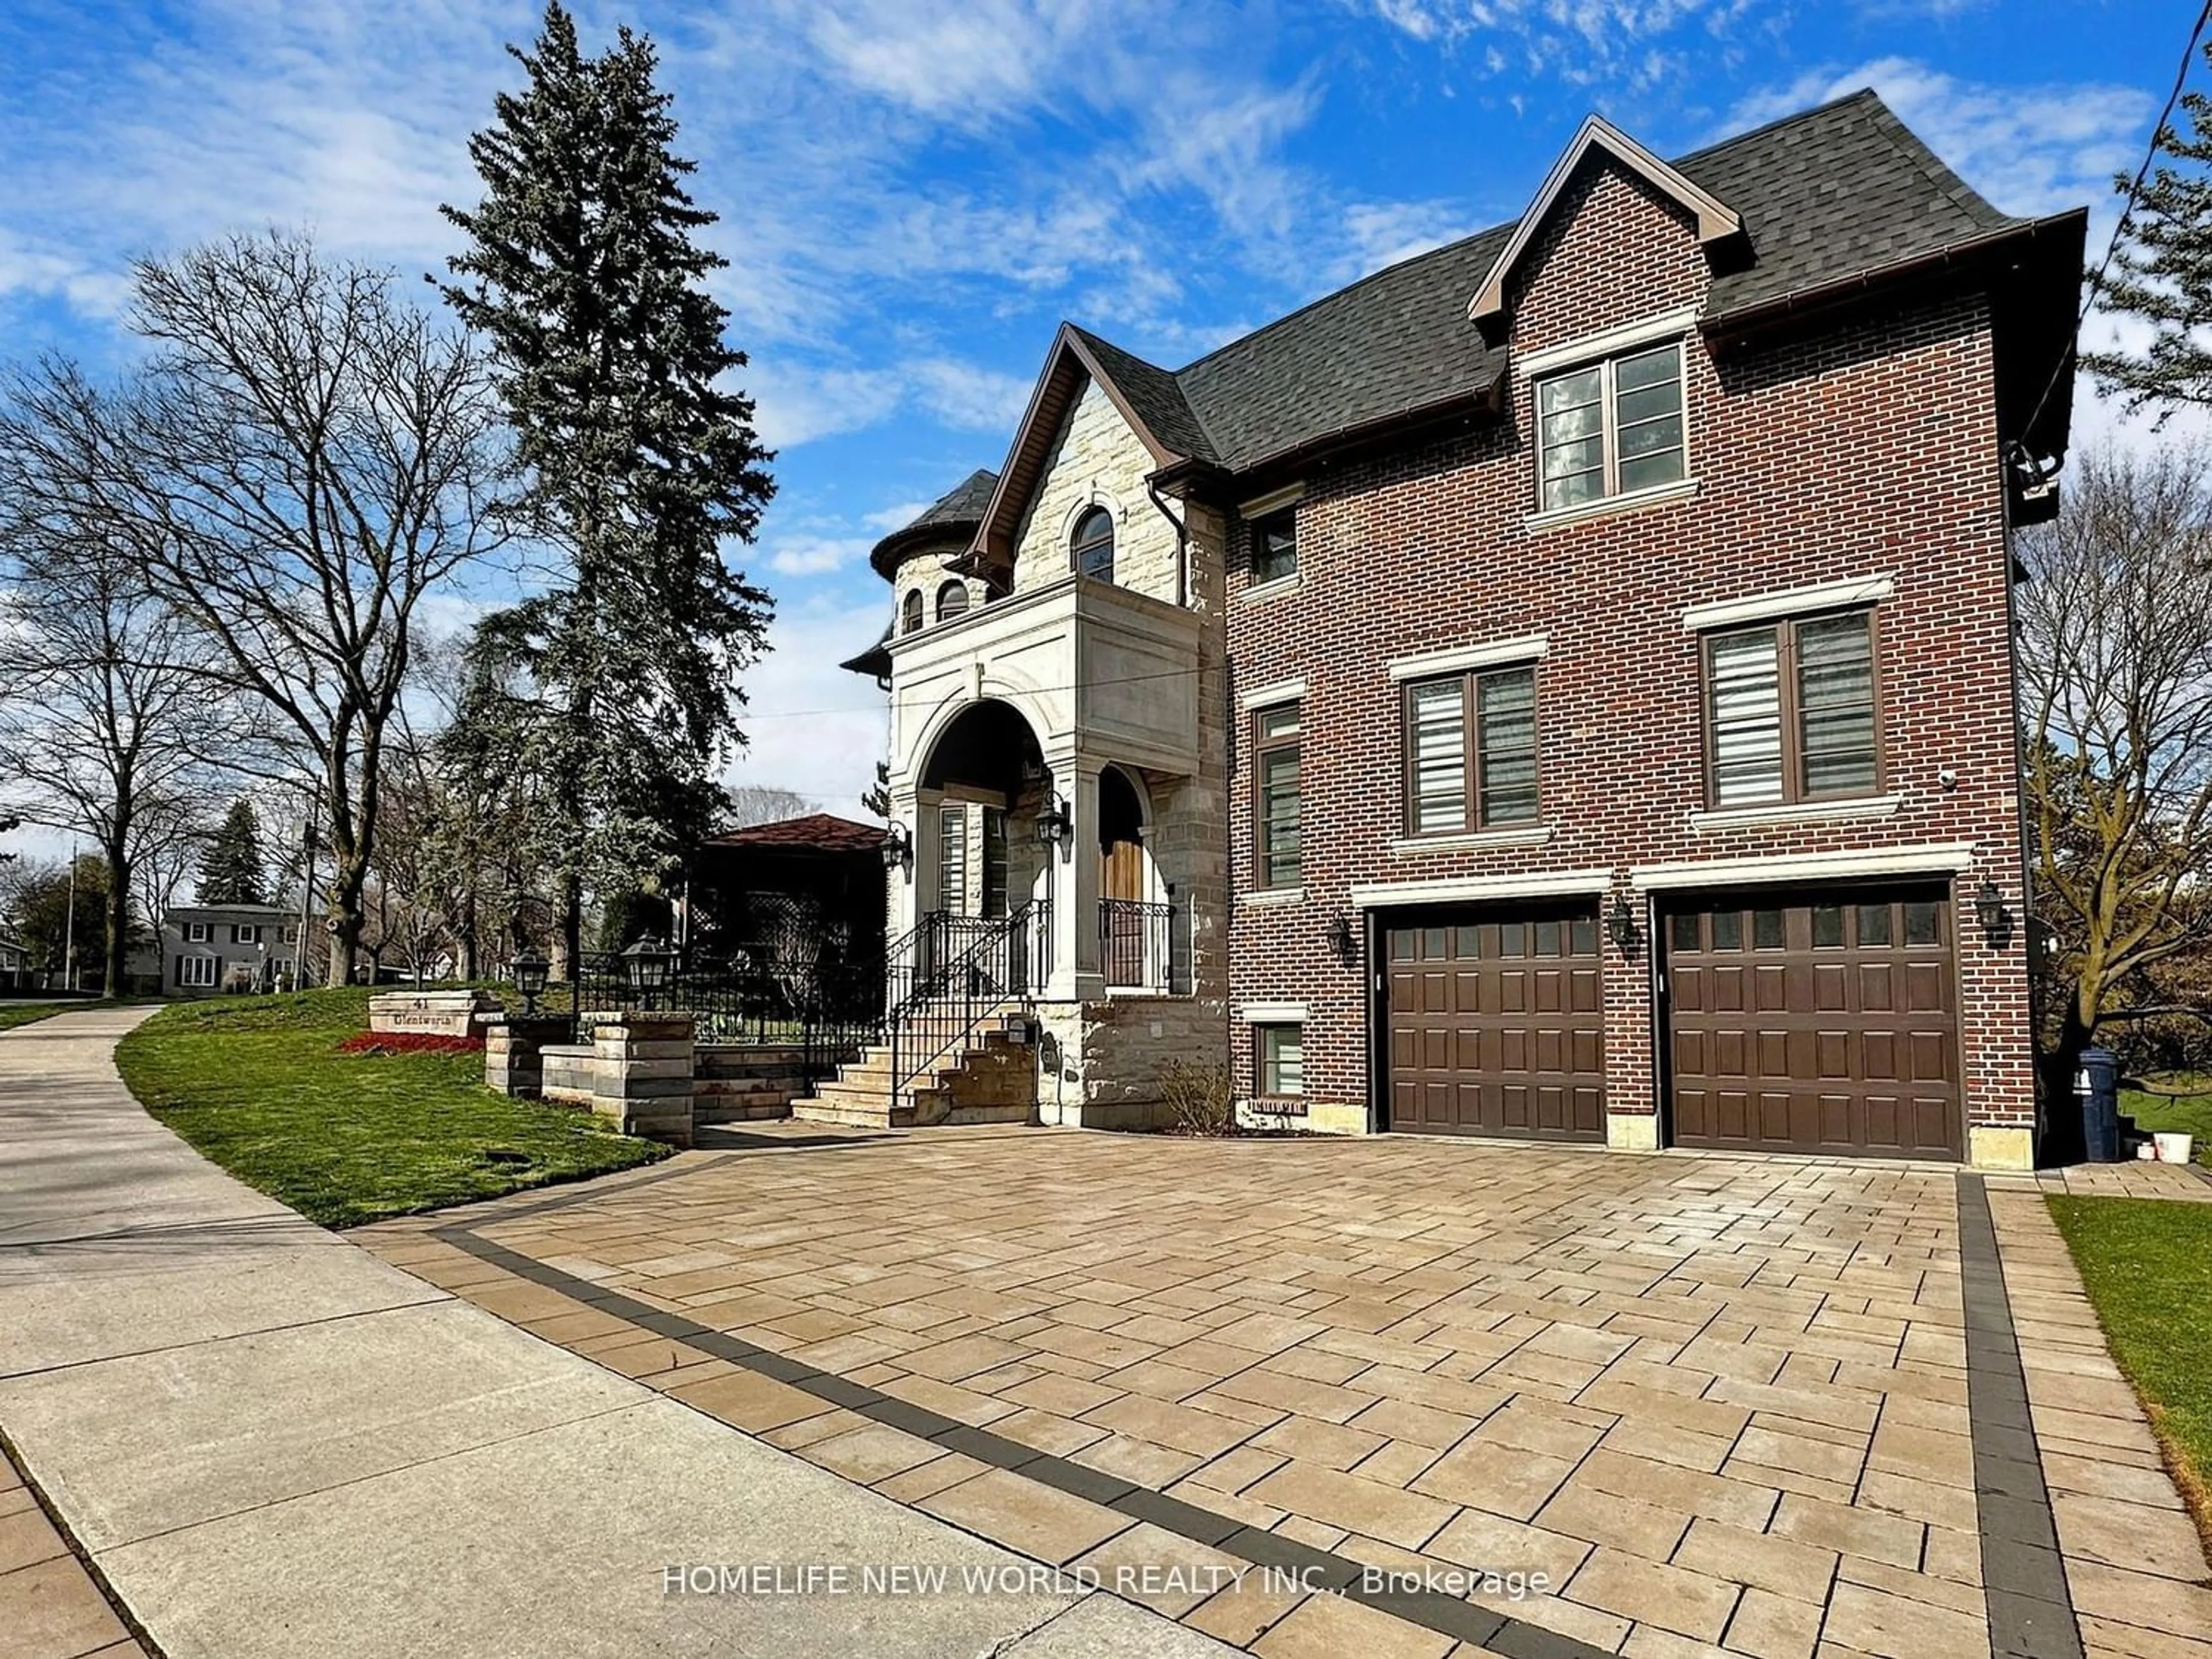 Home with brick exterior material for 41 Glentworth Rd, Toronto Ontario M2J 2E7